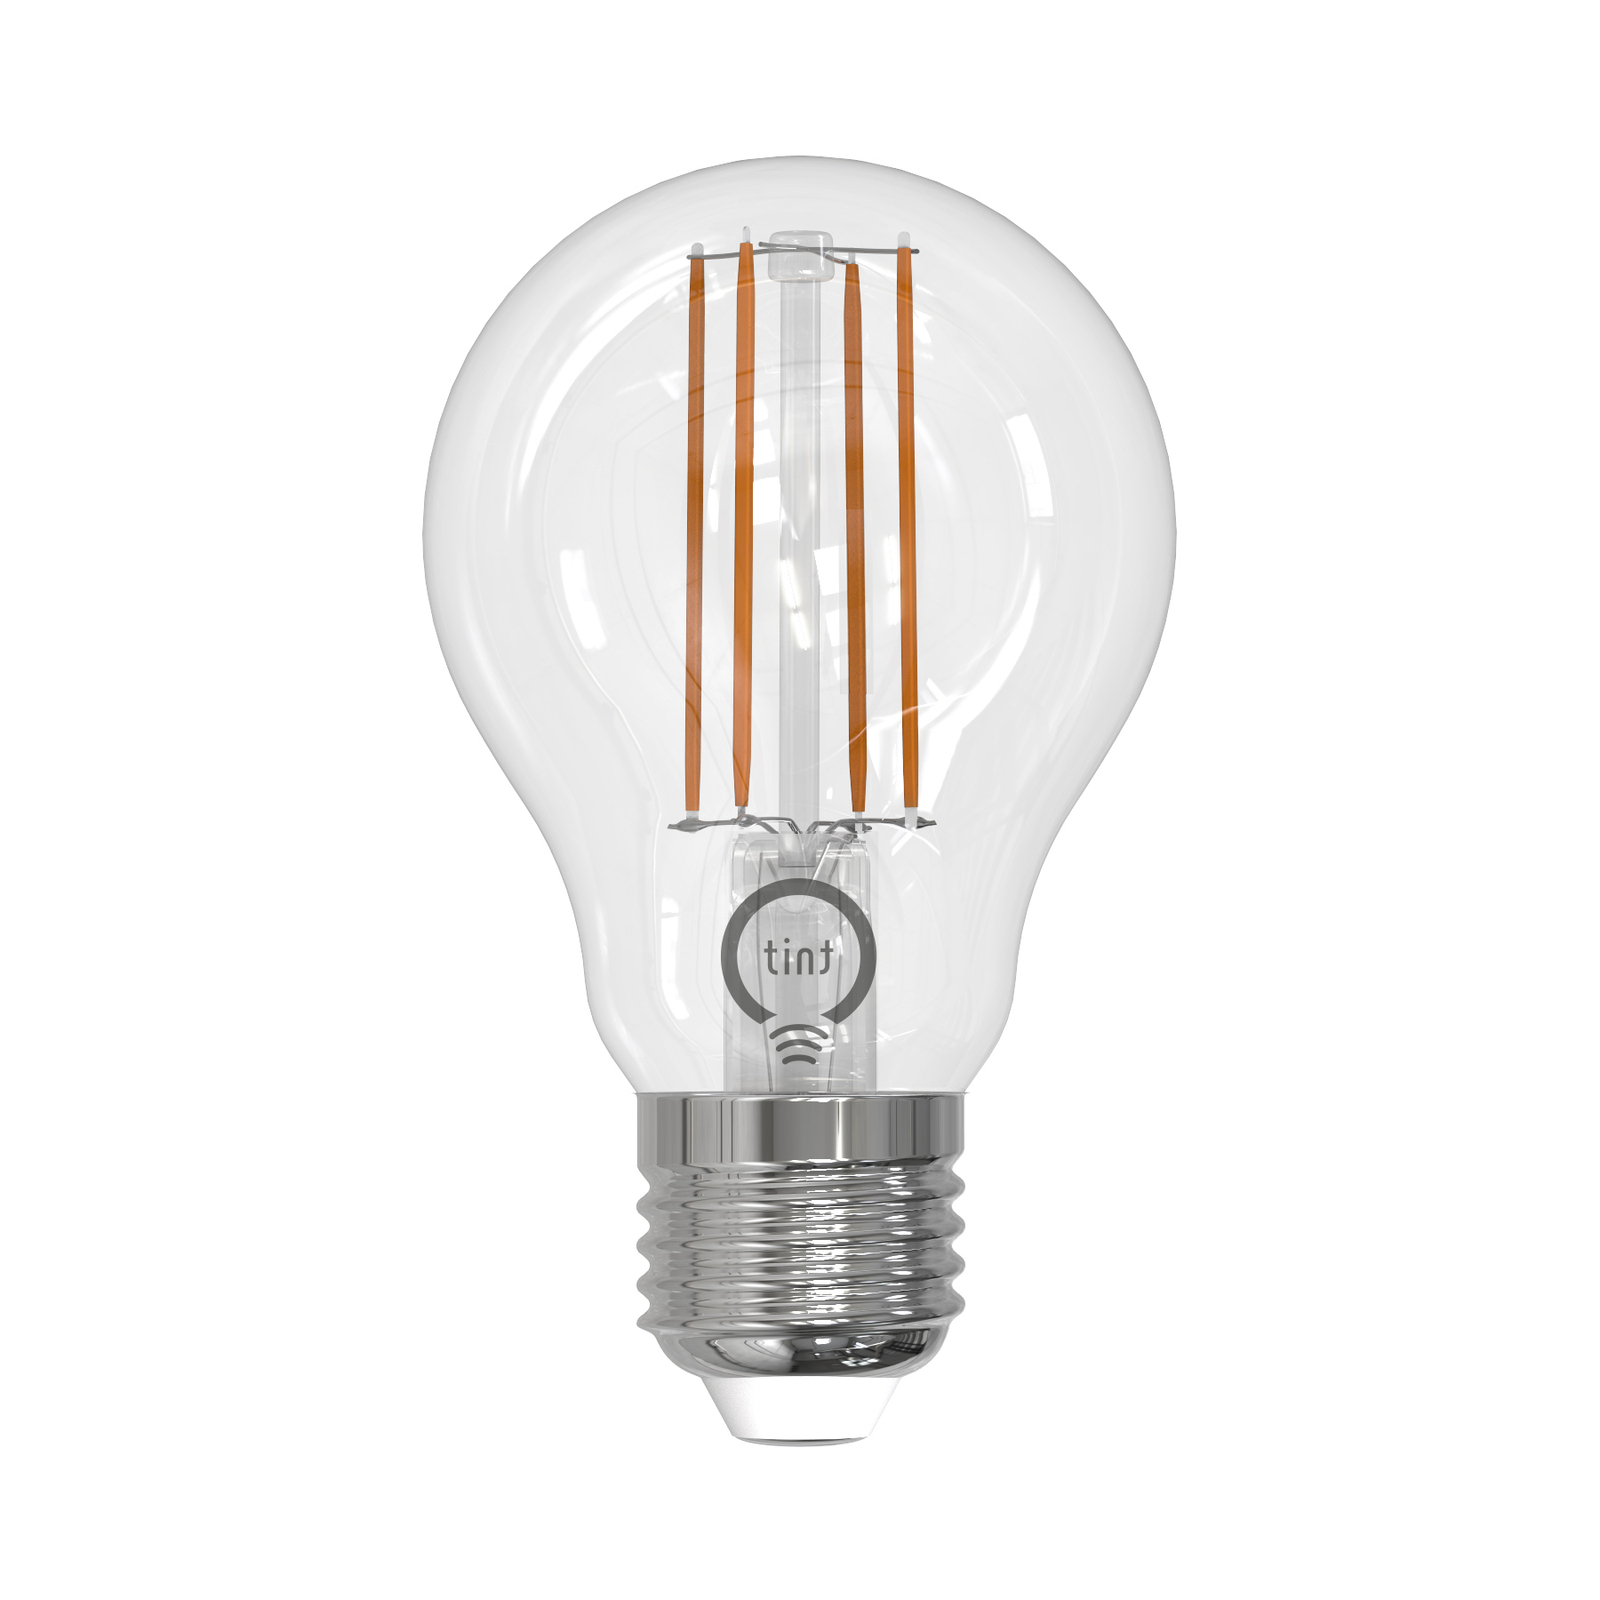 Müller Licht tint LED filament žiarovka E27 7W CCT